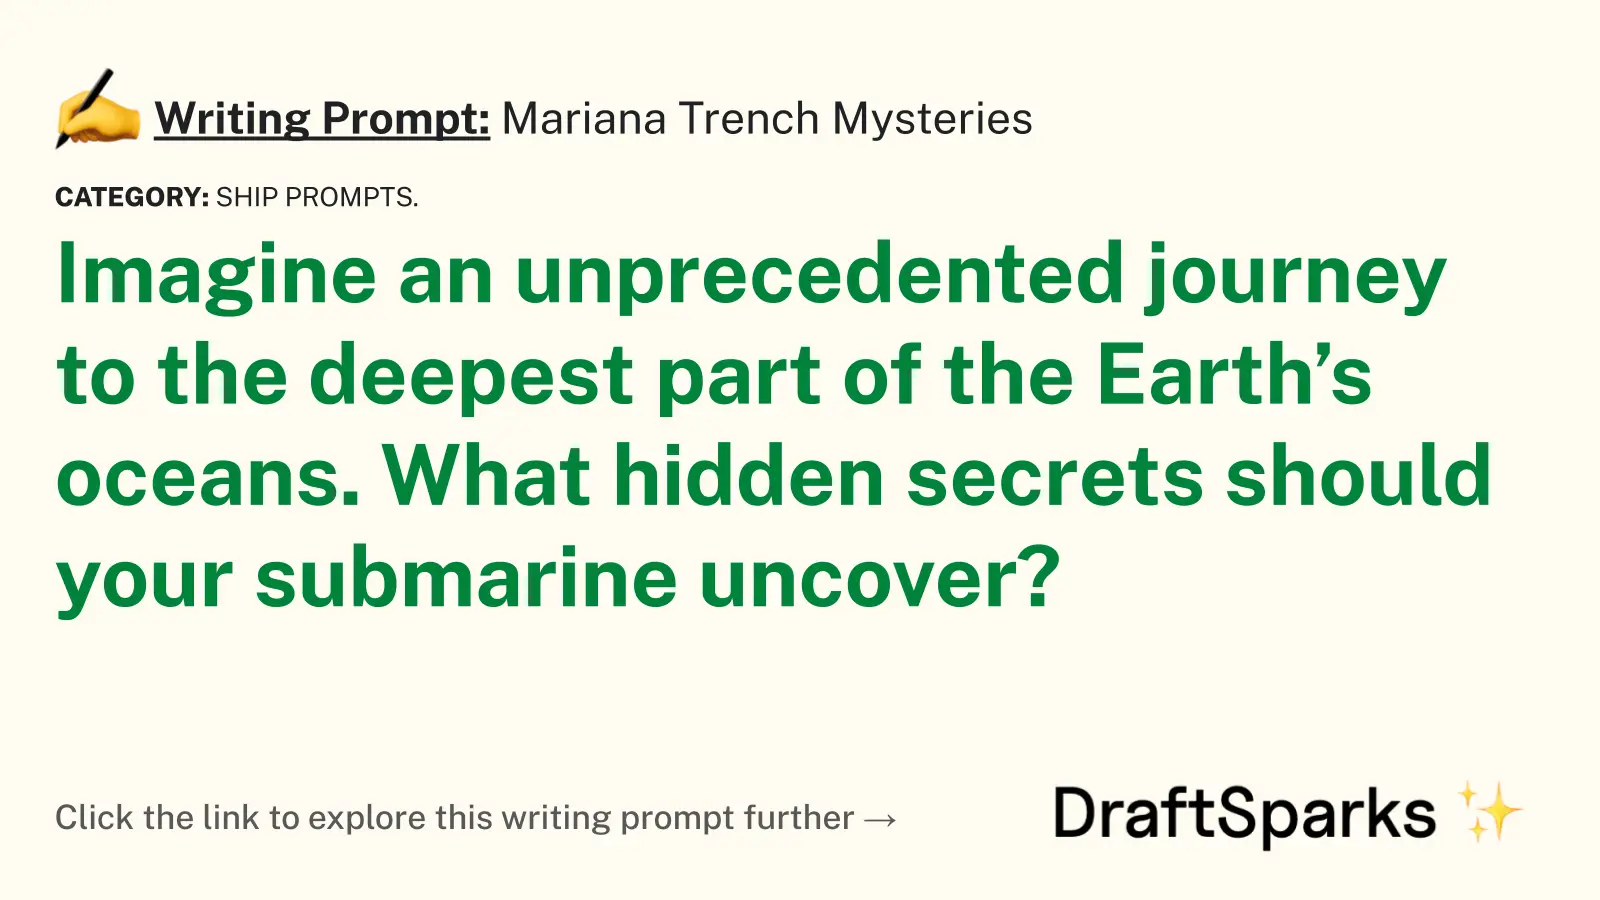 Mariana Trench Mysteries